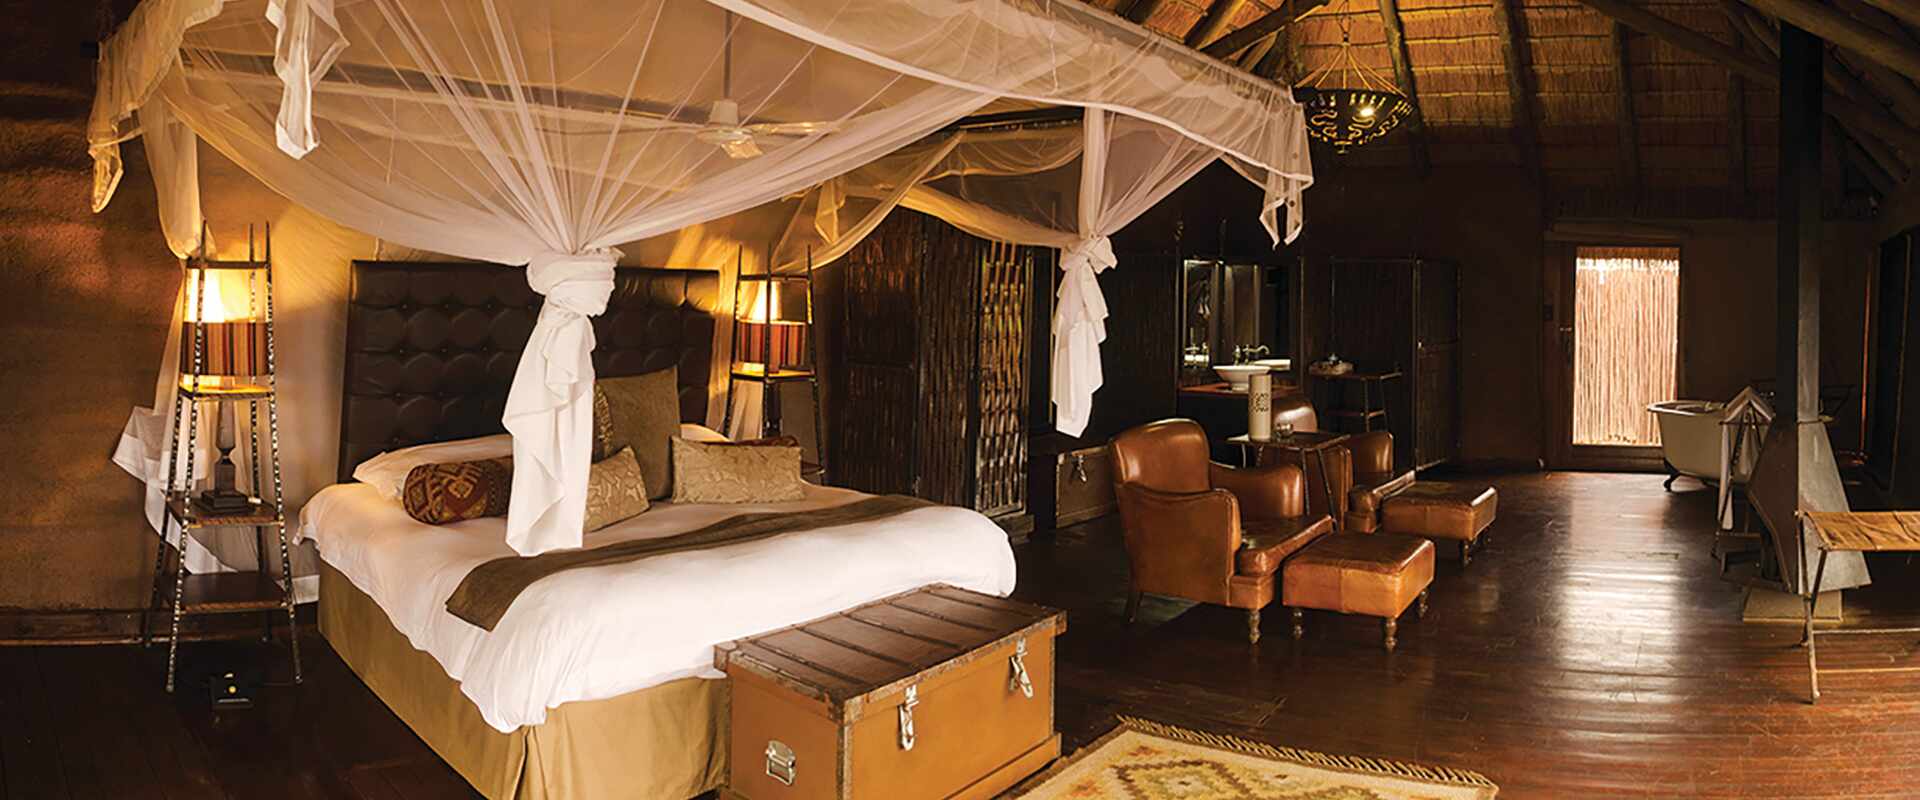 Safari Room Private Lodge, South Africa